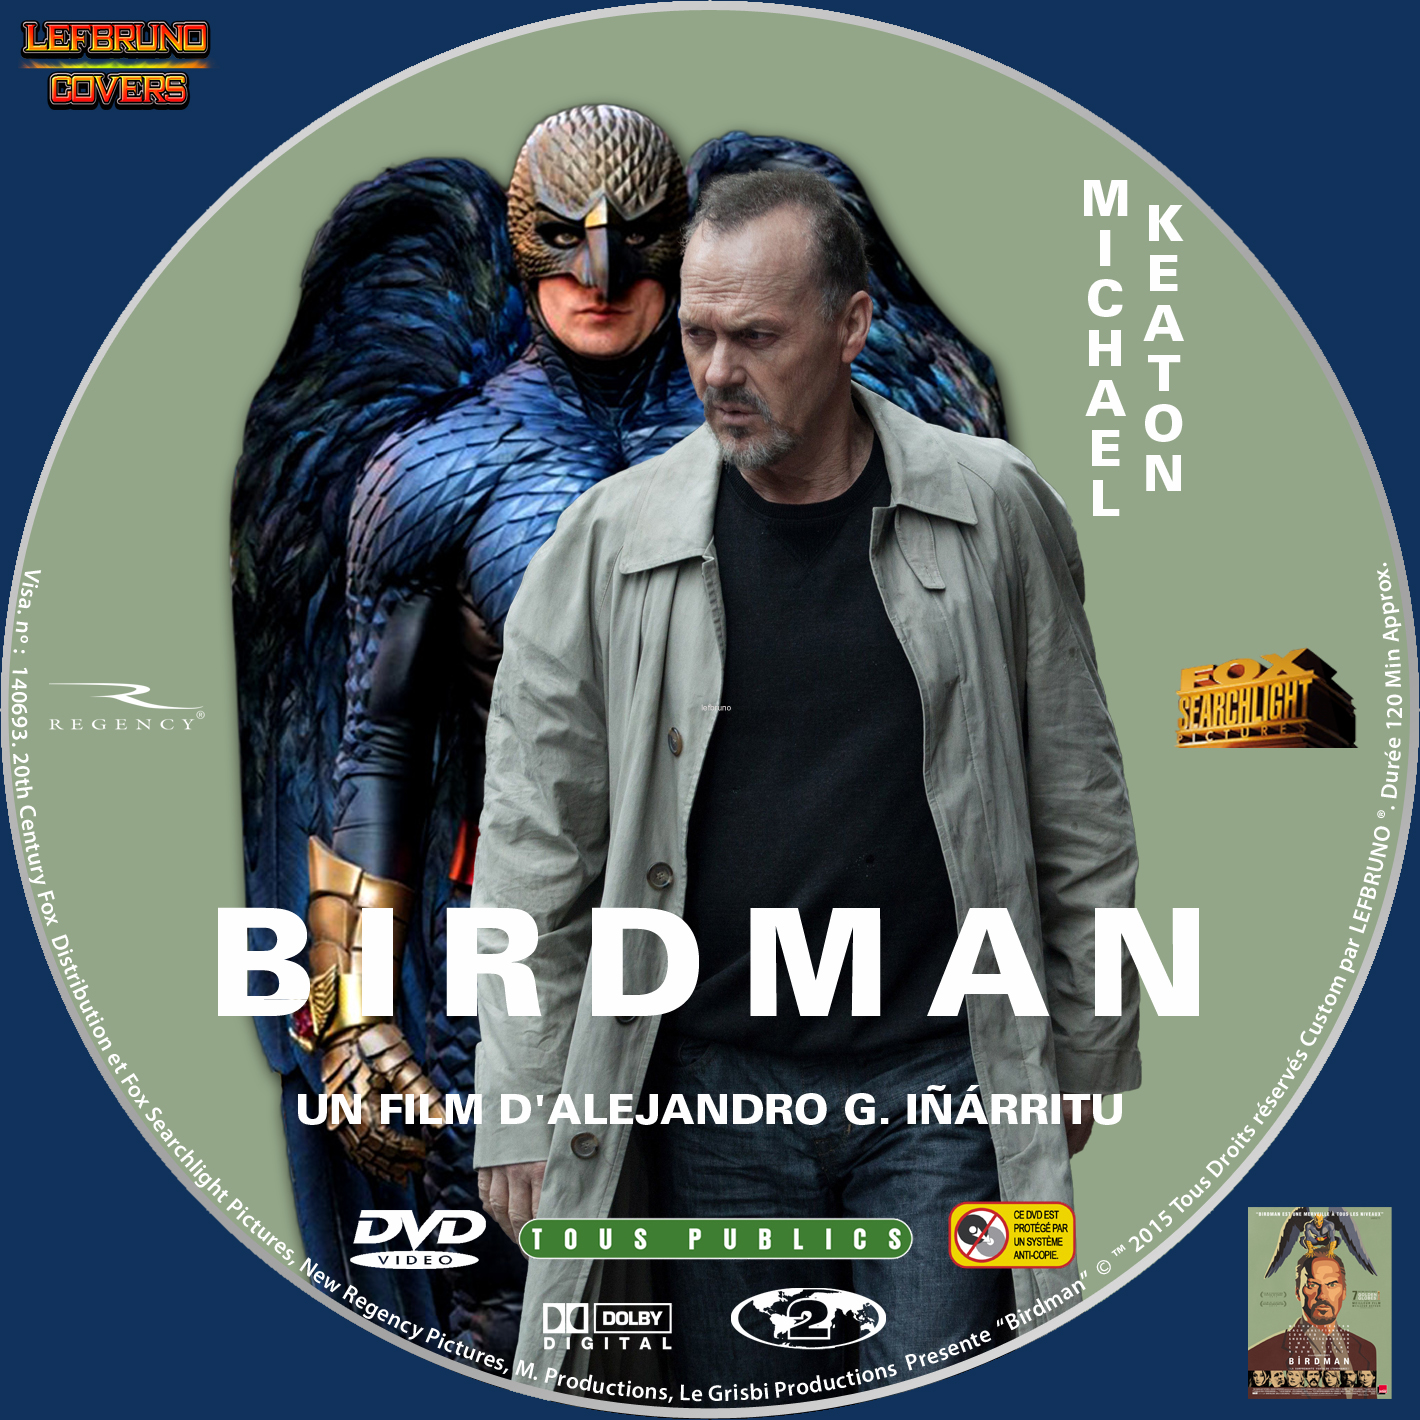 Birdman custom